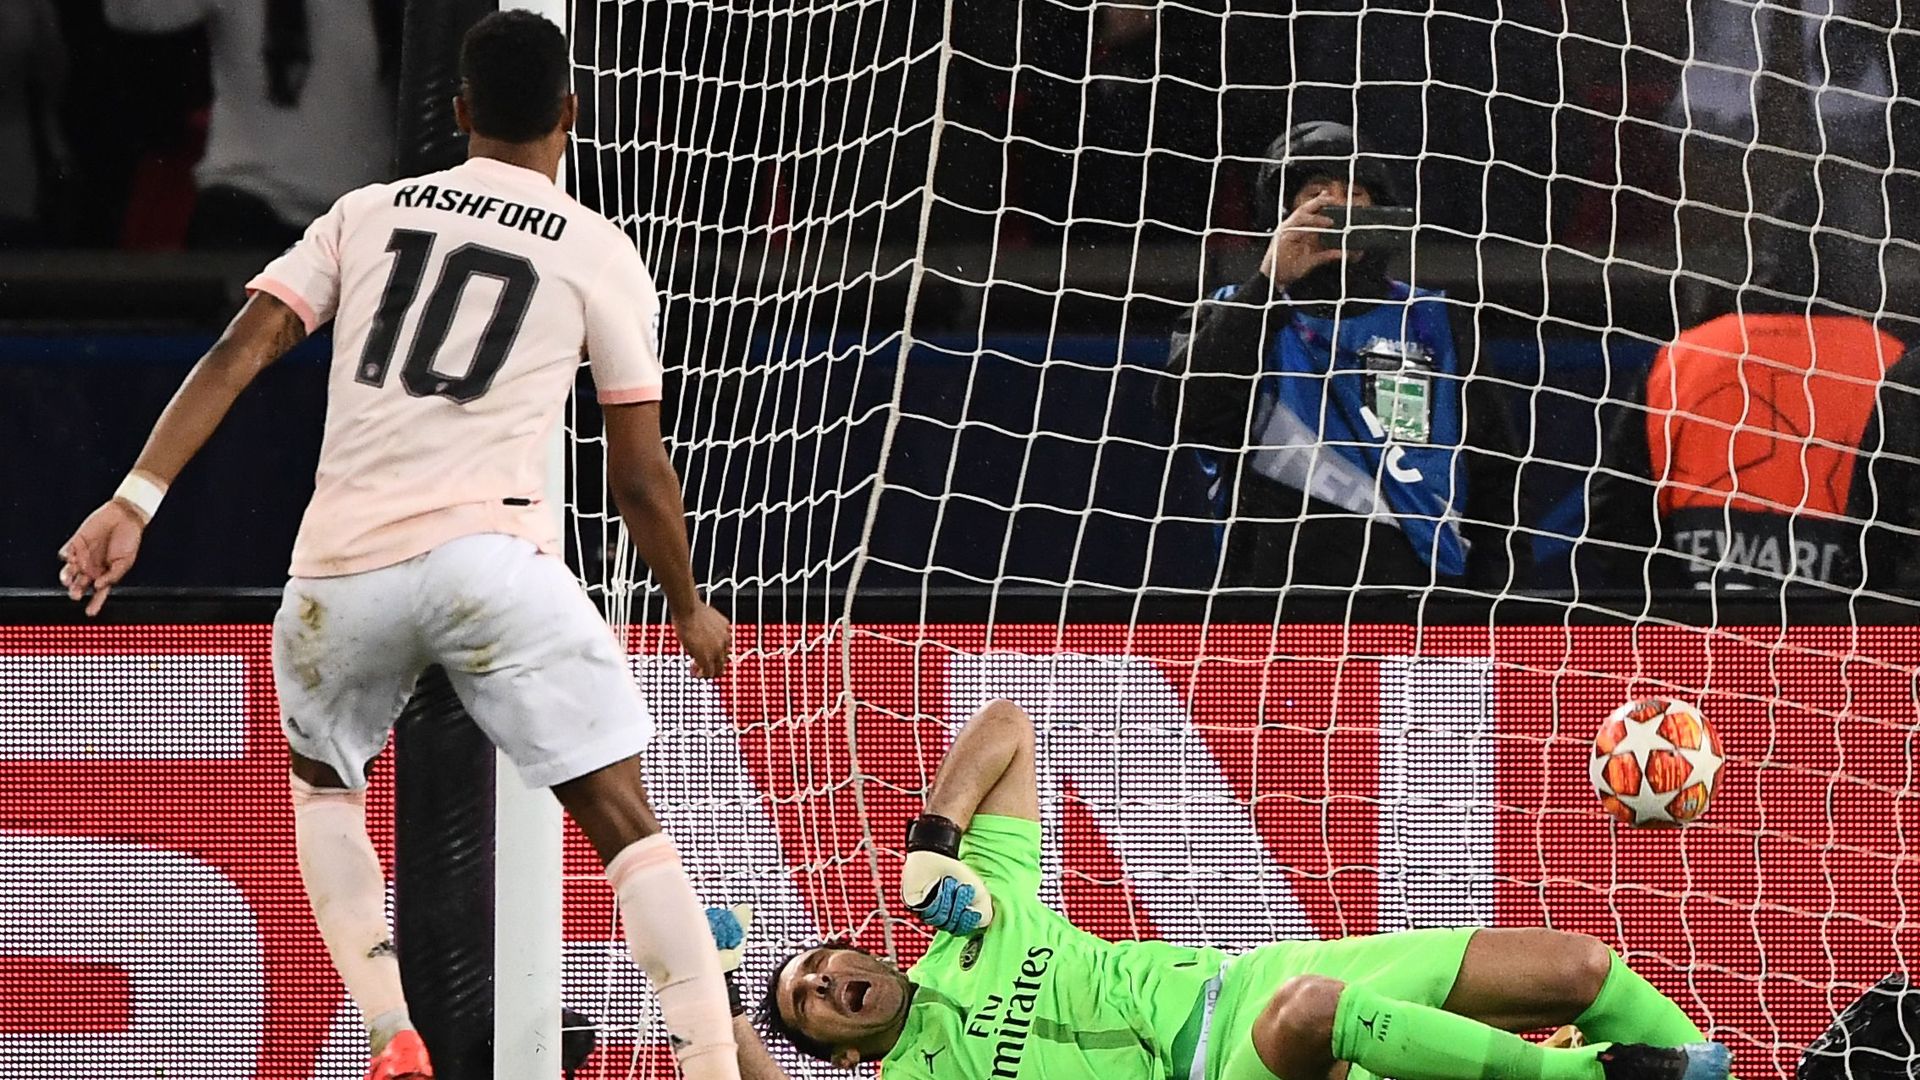 Marcus Rashford sent the winning penalty past PSG goalkeeper Gianluigi Buffon.